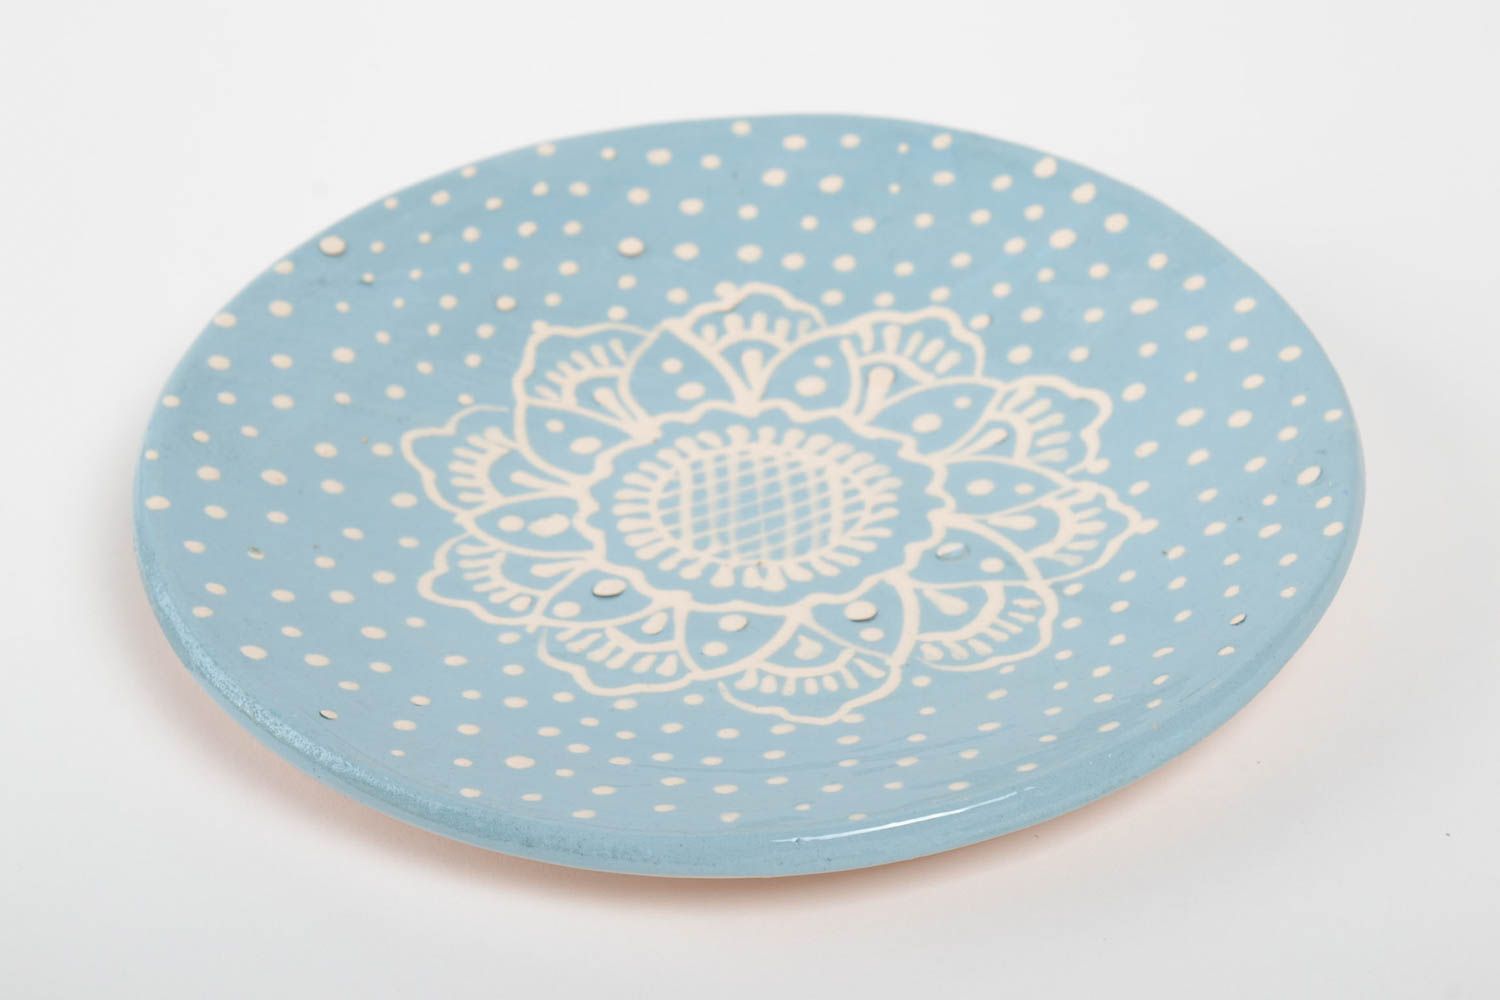 Handmade ceramic dish serving plate ceramic dinnerware kitchen supplies photo 3